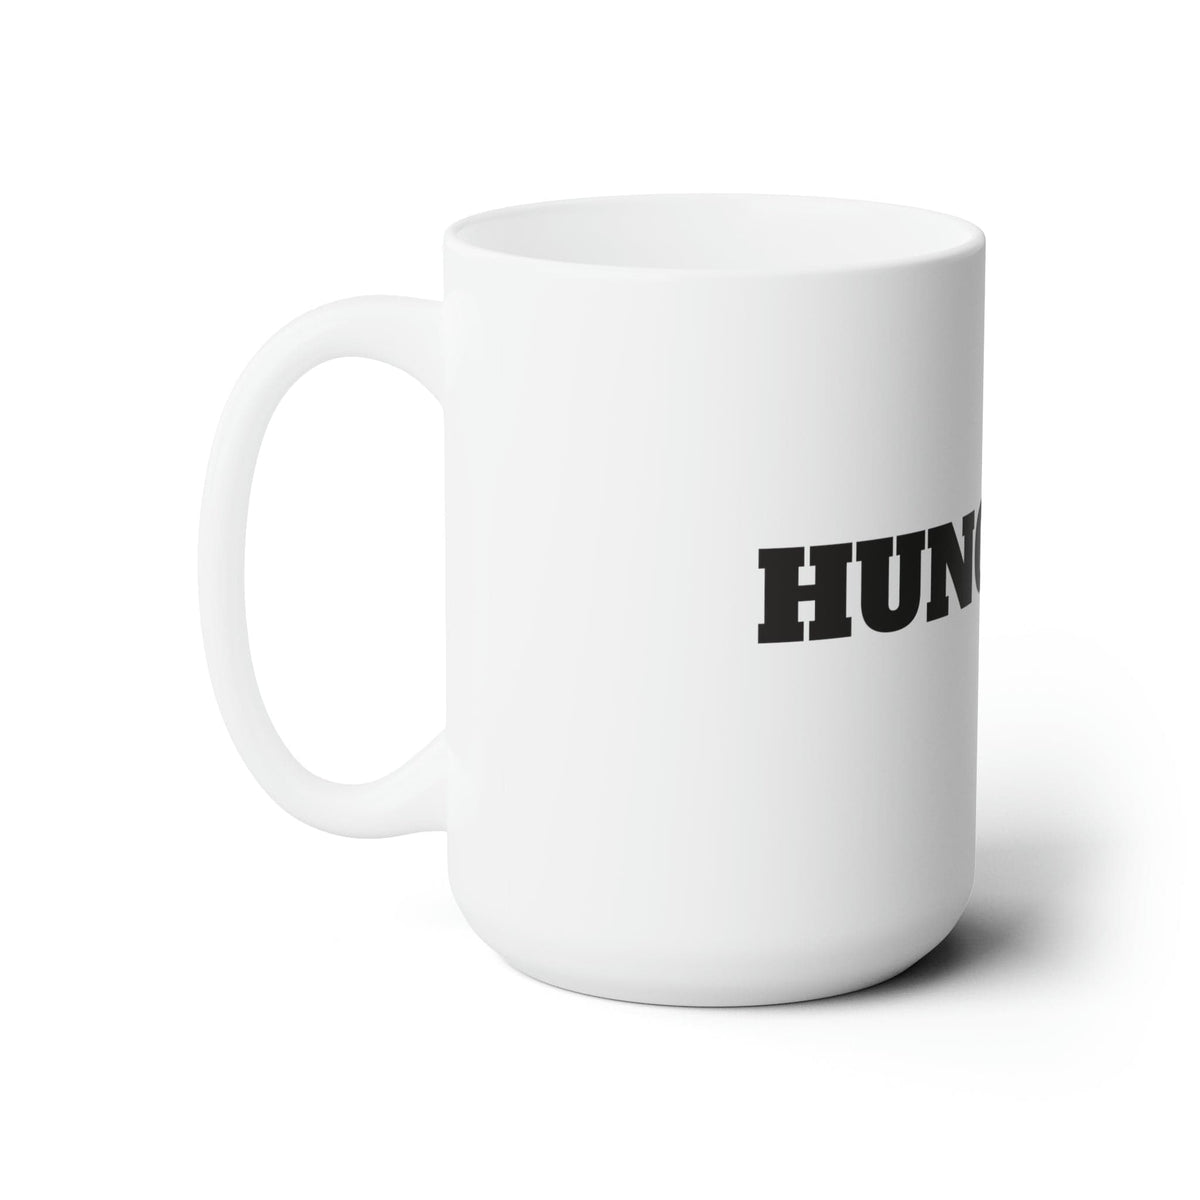 Hungover Ceramic Mug 15oz | Funny Gift for friends | Birthday gift Mug TheFringeCultureCollective